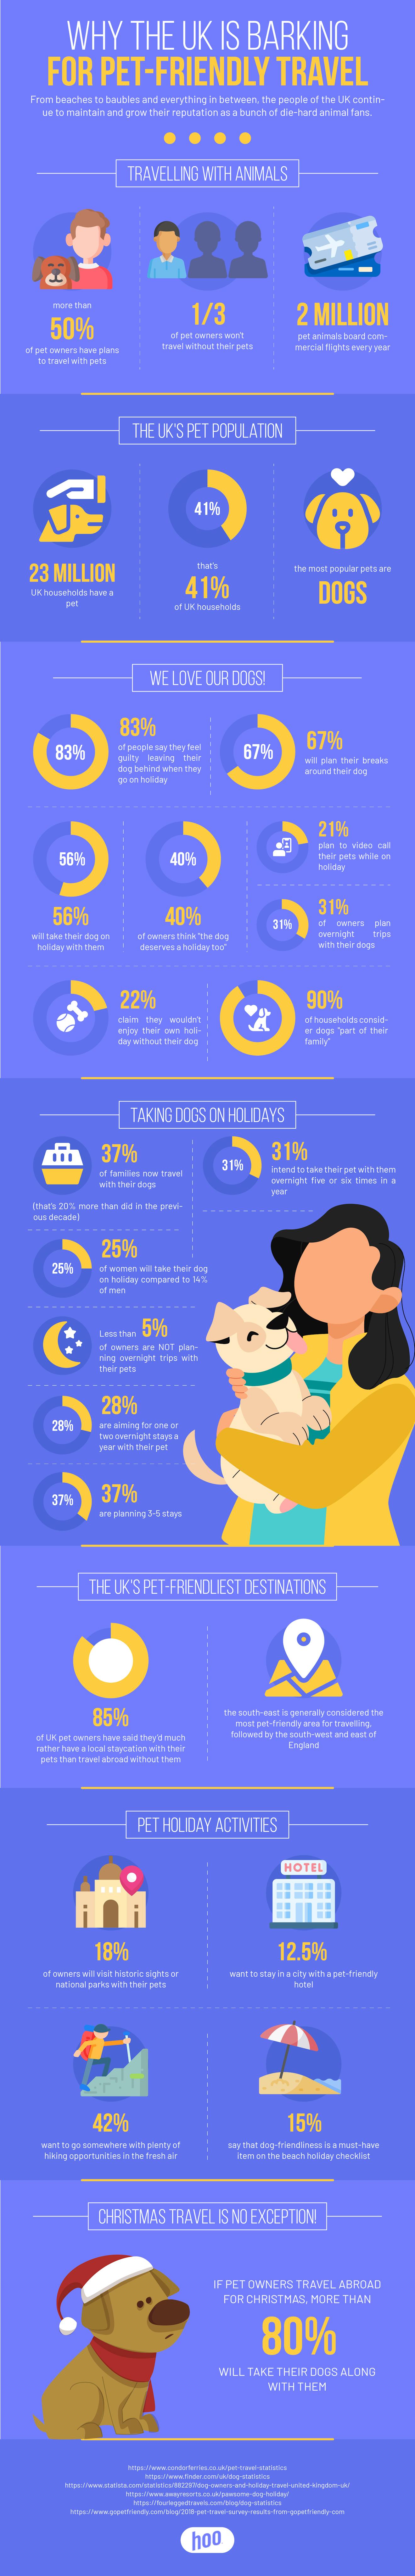 UK Pet Travel Statistics infographic by hoo